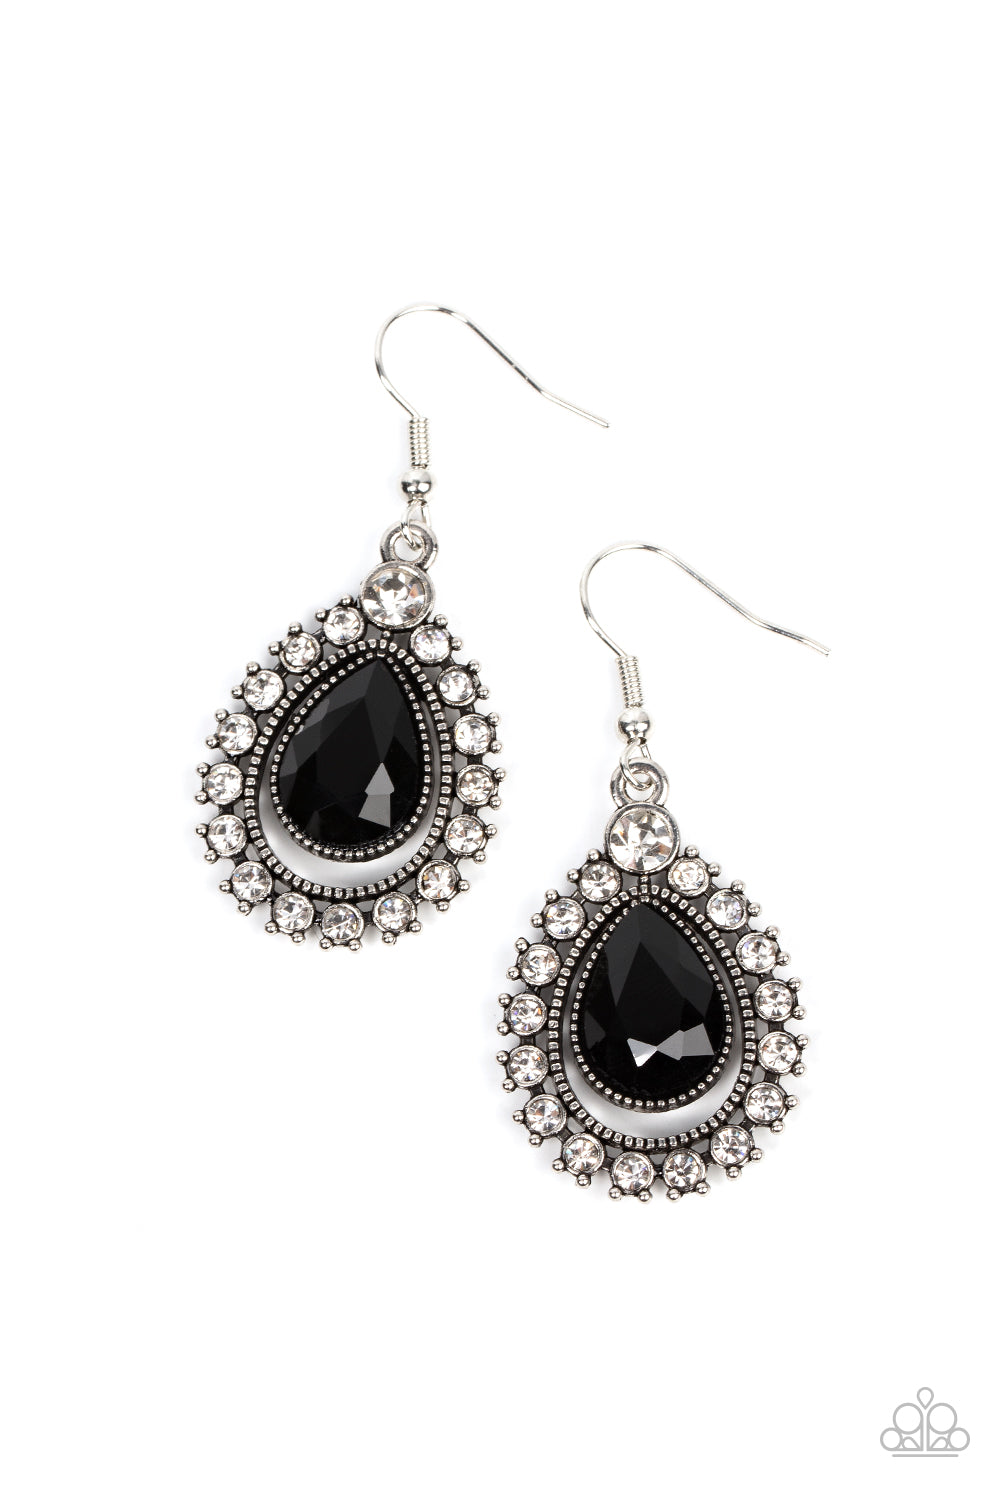  Fashion jewelry designer imitation pearl camellia charm dangle  earrings for women (MISASHA black): Clothing, Shoes & Jewelry